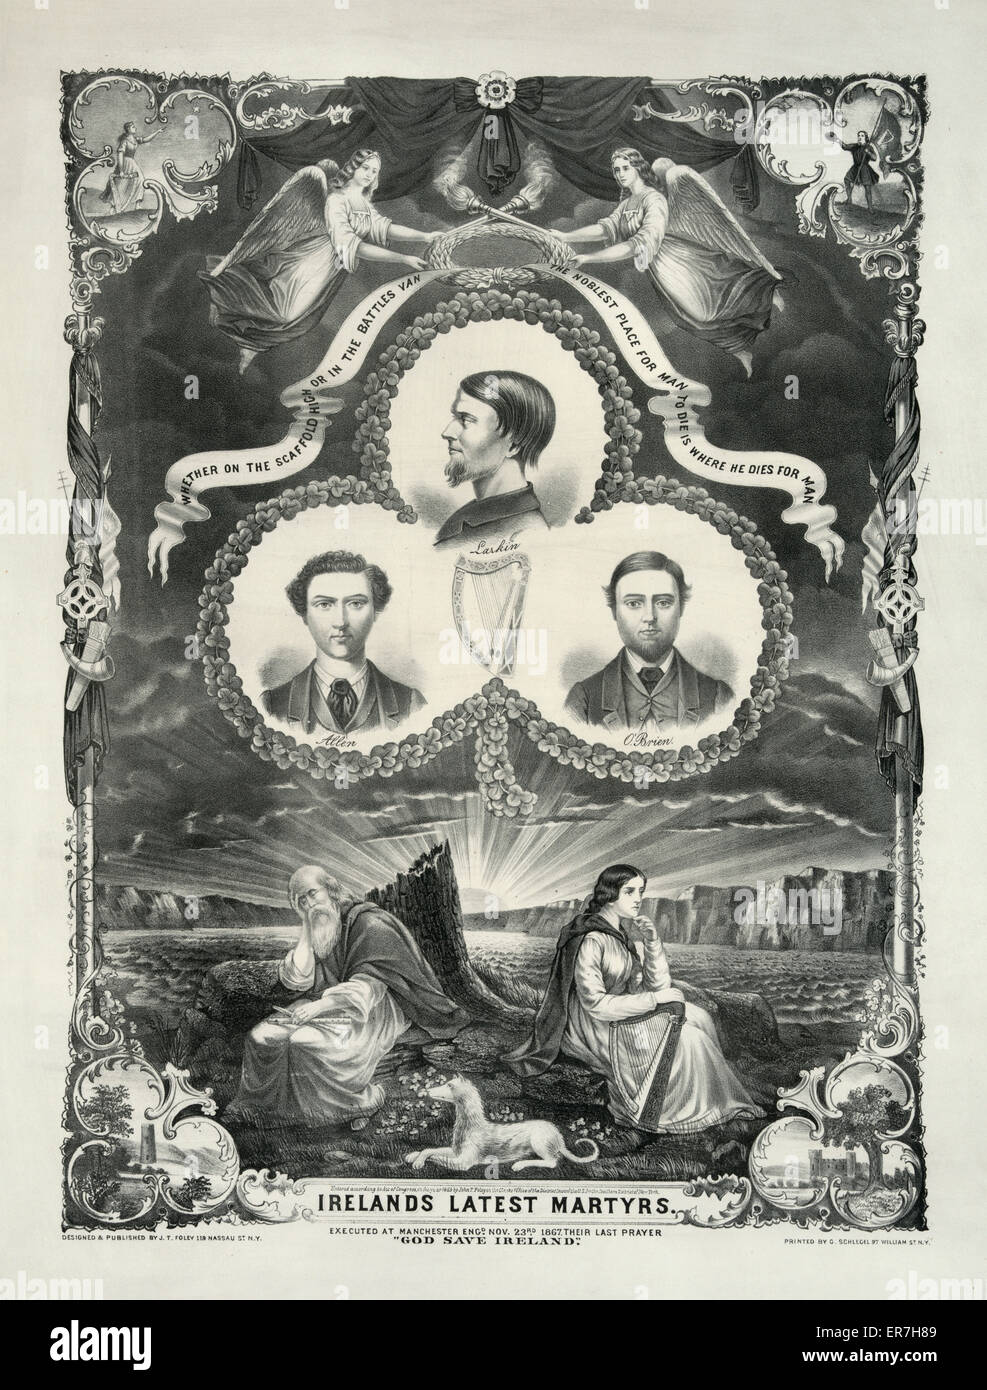 Irelands latest martyrs. Date c1869. Stock Photo